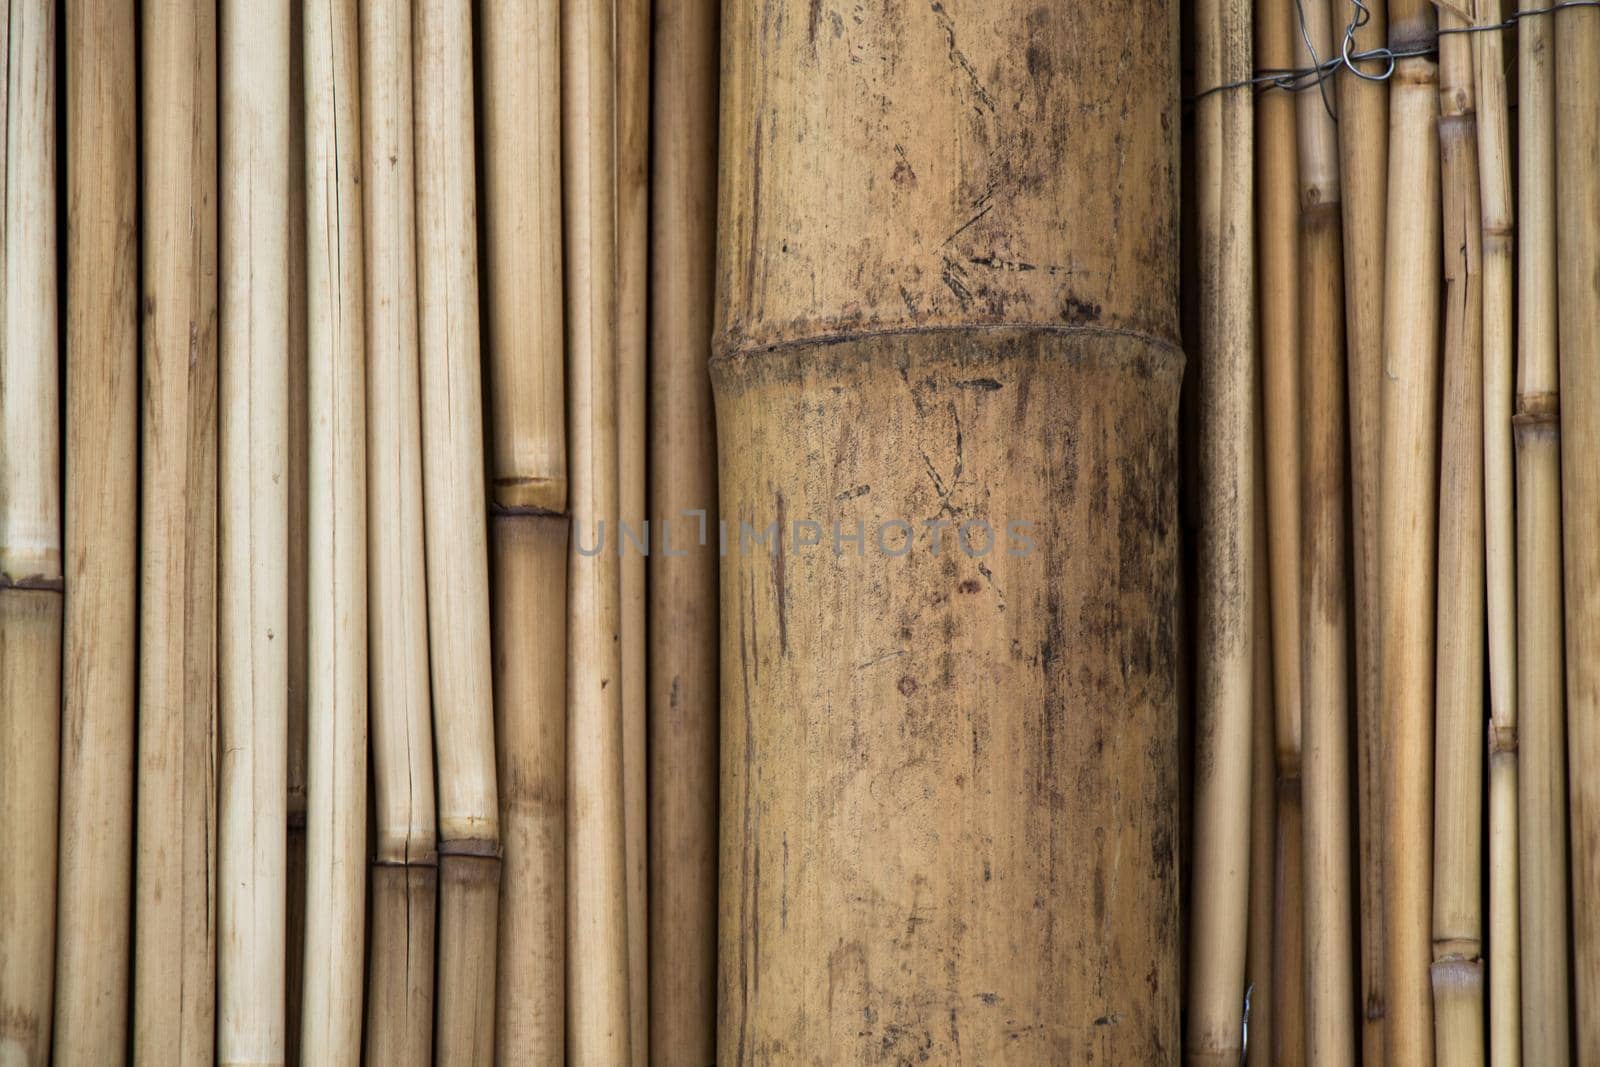 Bamboo sticks in stacks in view